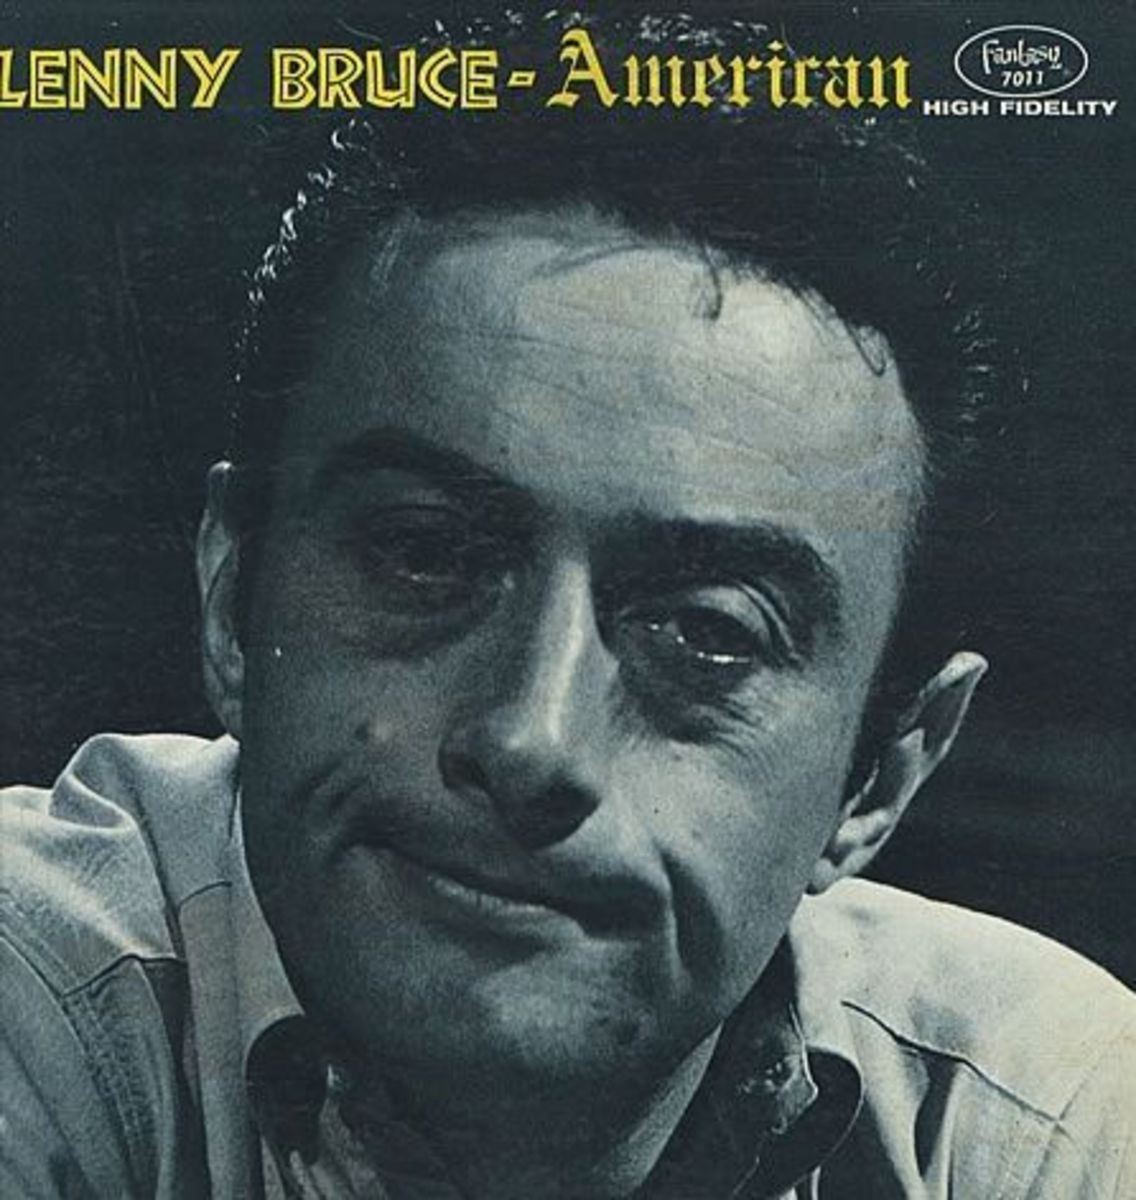 Lenny Bruce "American" Fantasy Records 7011 12" LP Vinyl Record, US Pressing (1960)